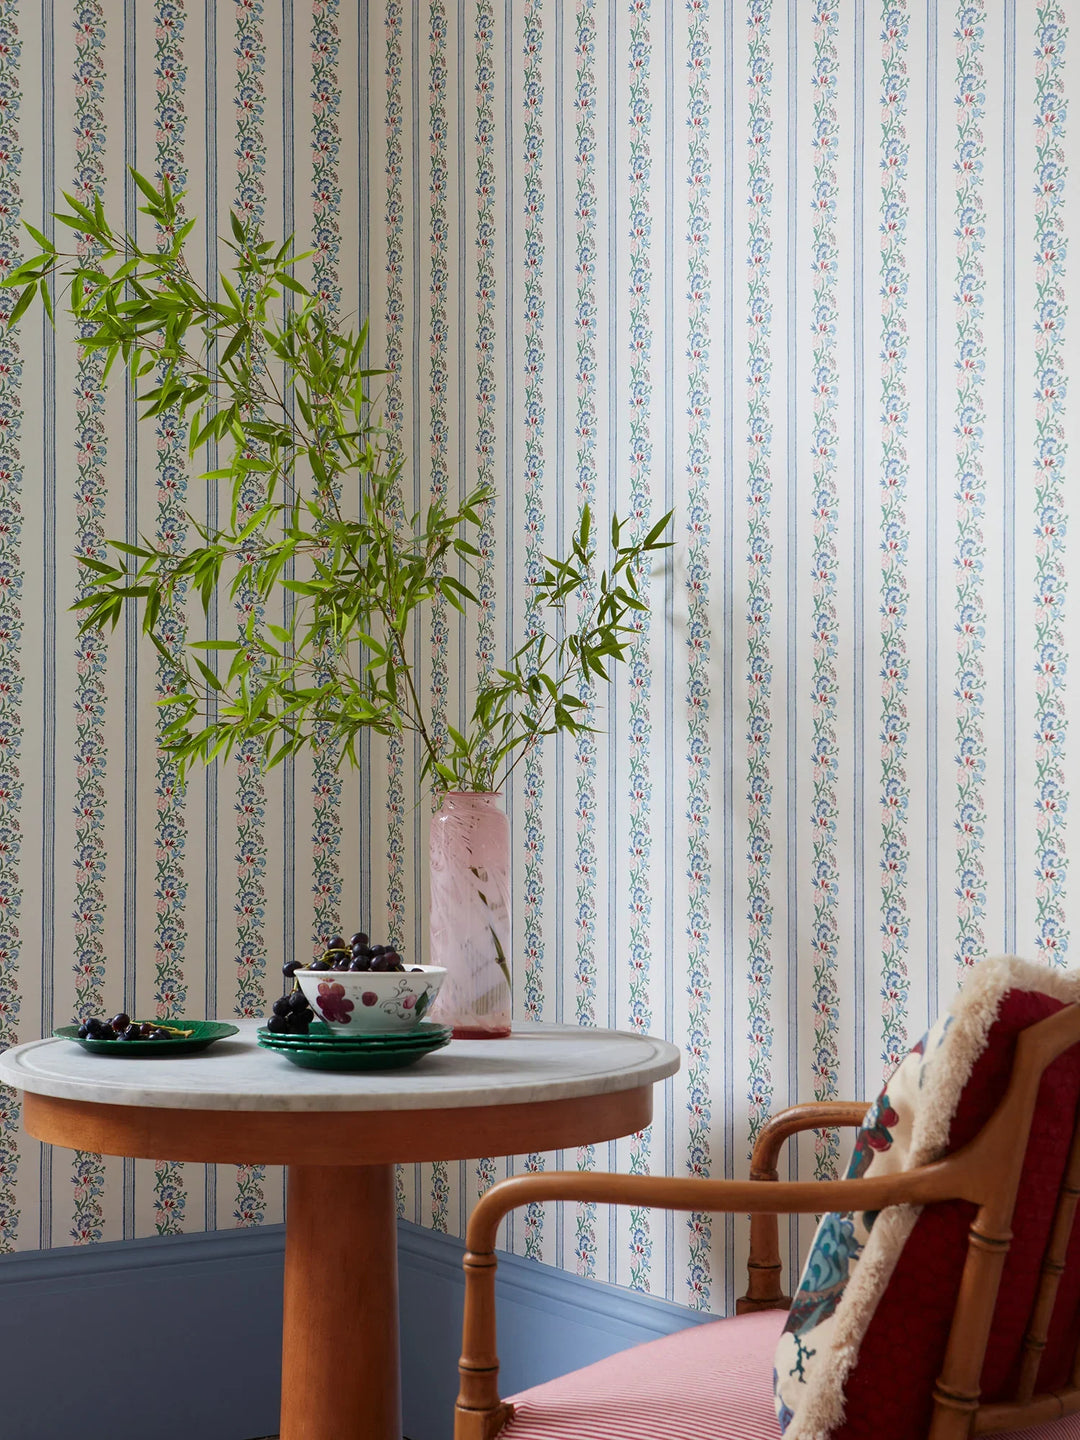 trousseau-wallpaper-berry-stripe-botanical-floral-ditsy-design-dining-room